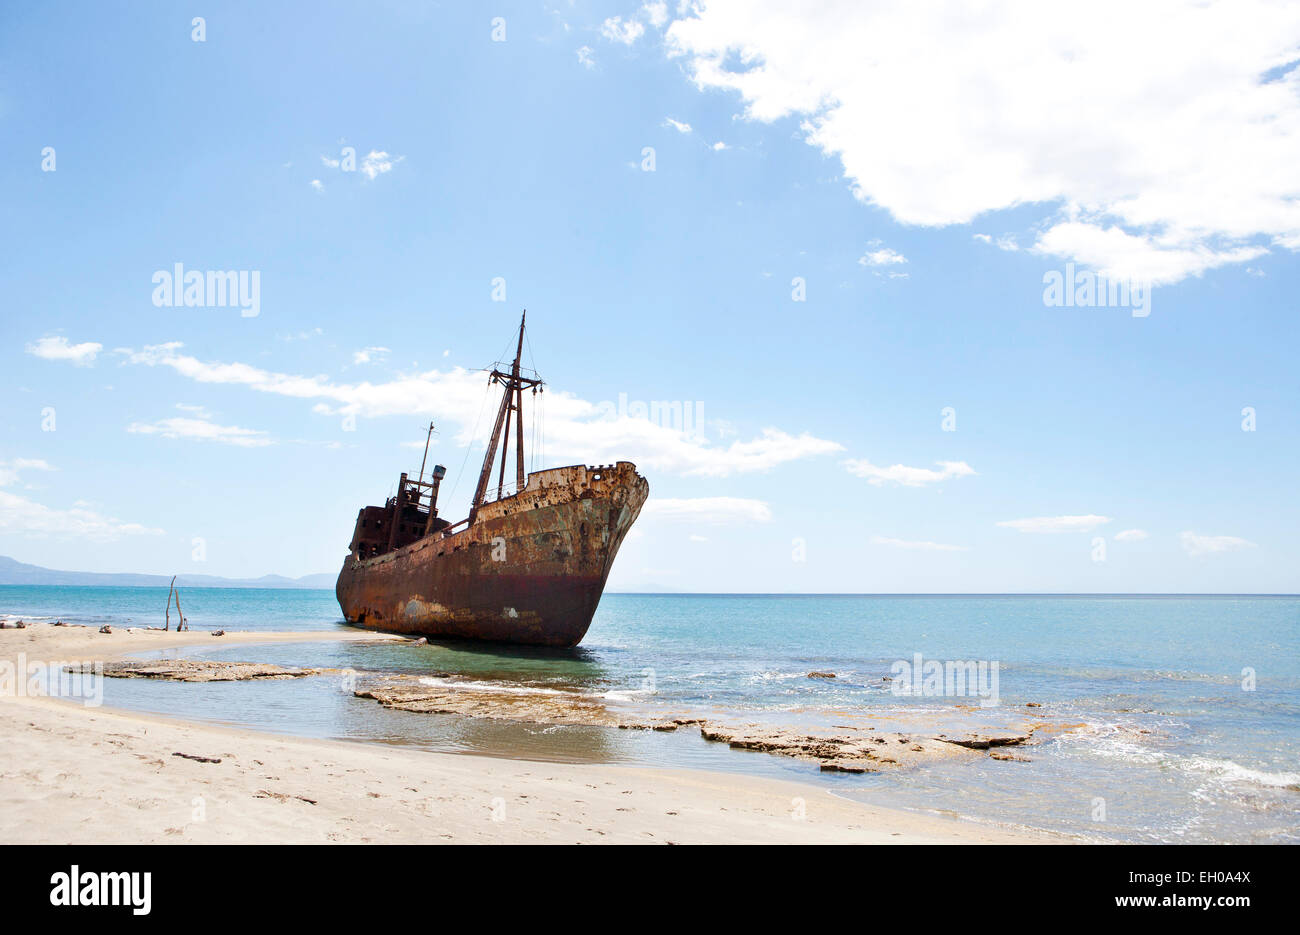 La Grèce, Gythio, ship wreck at beach Banque D'Images